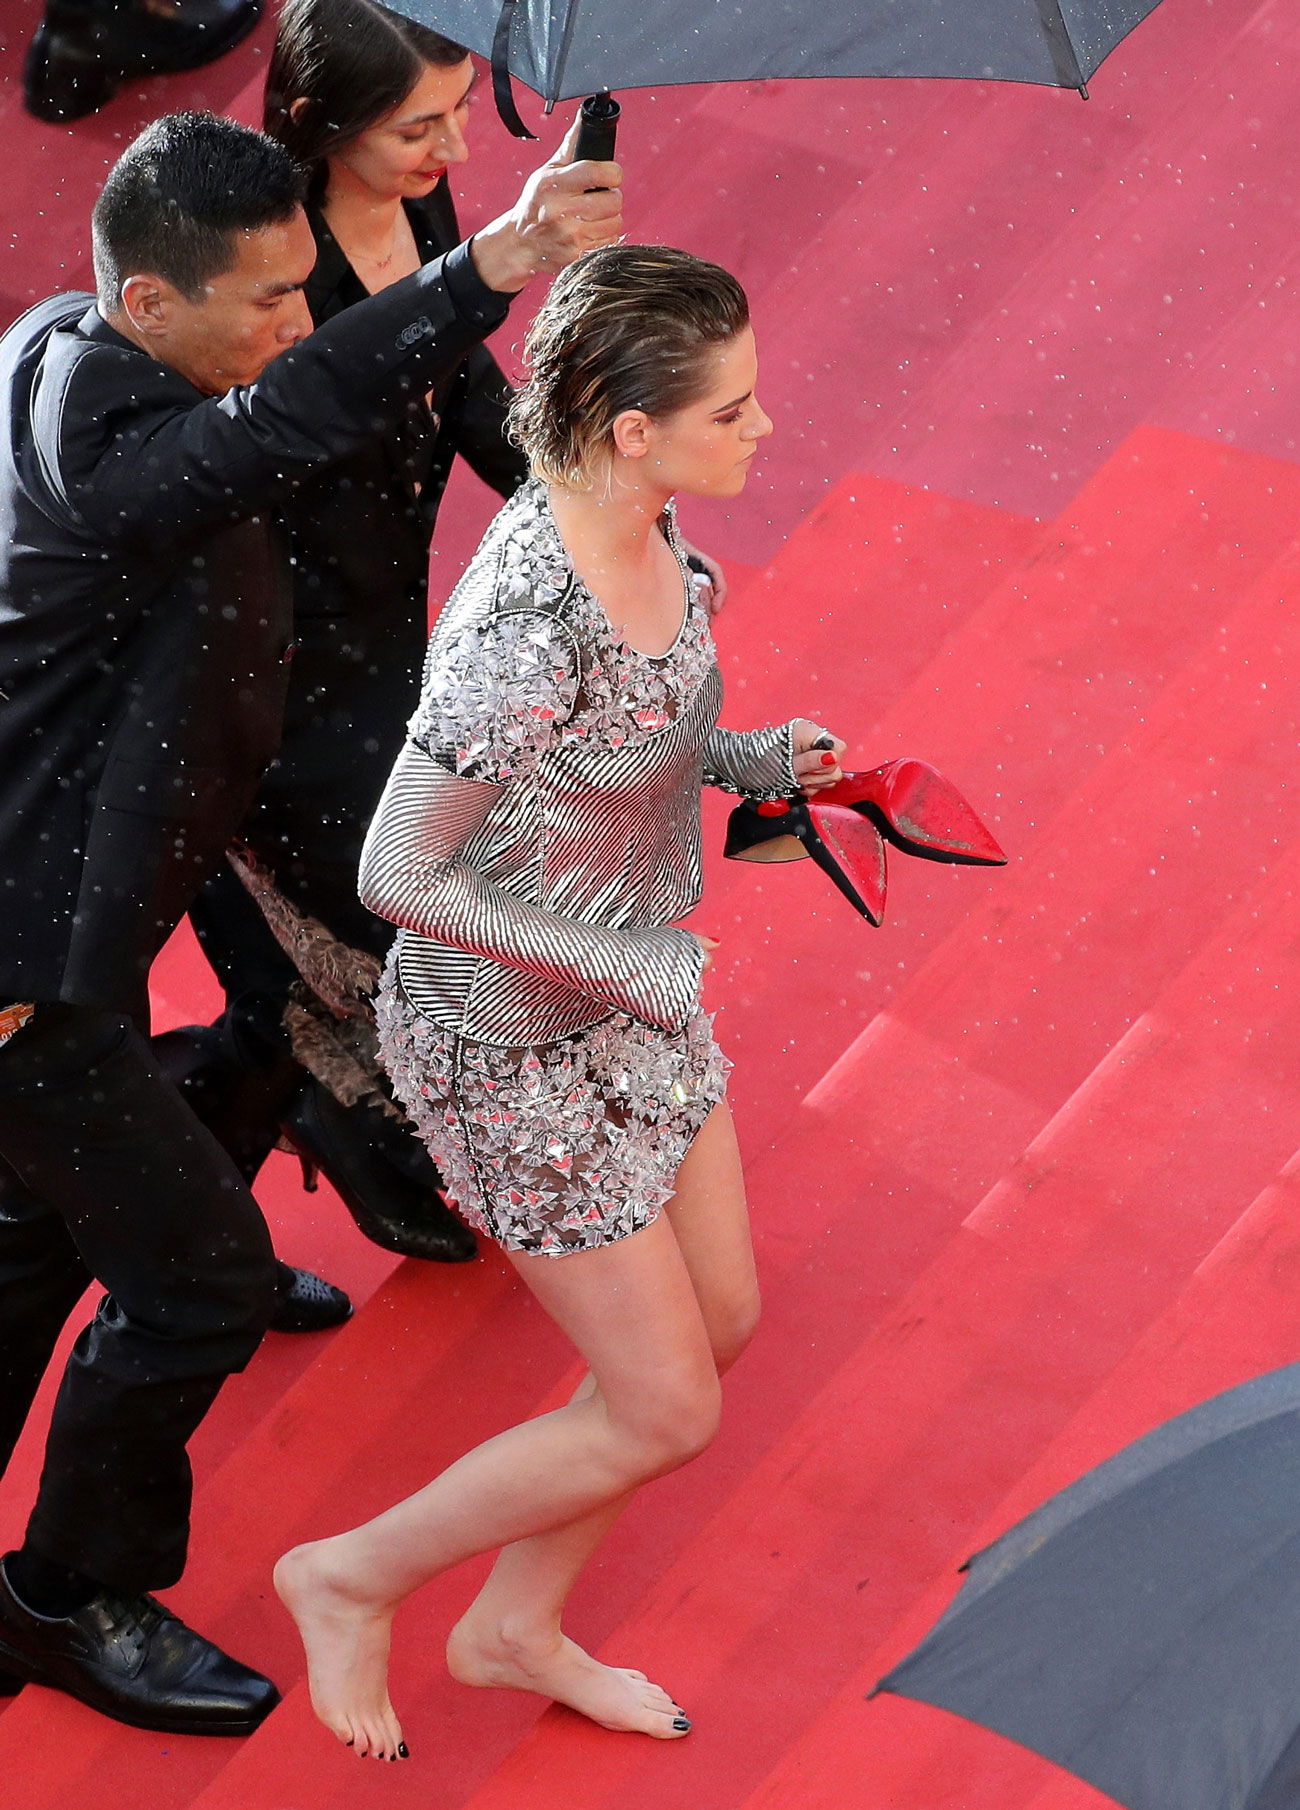 Kristen Stewart went barefoot on the red carpet wearing a silver short dress.